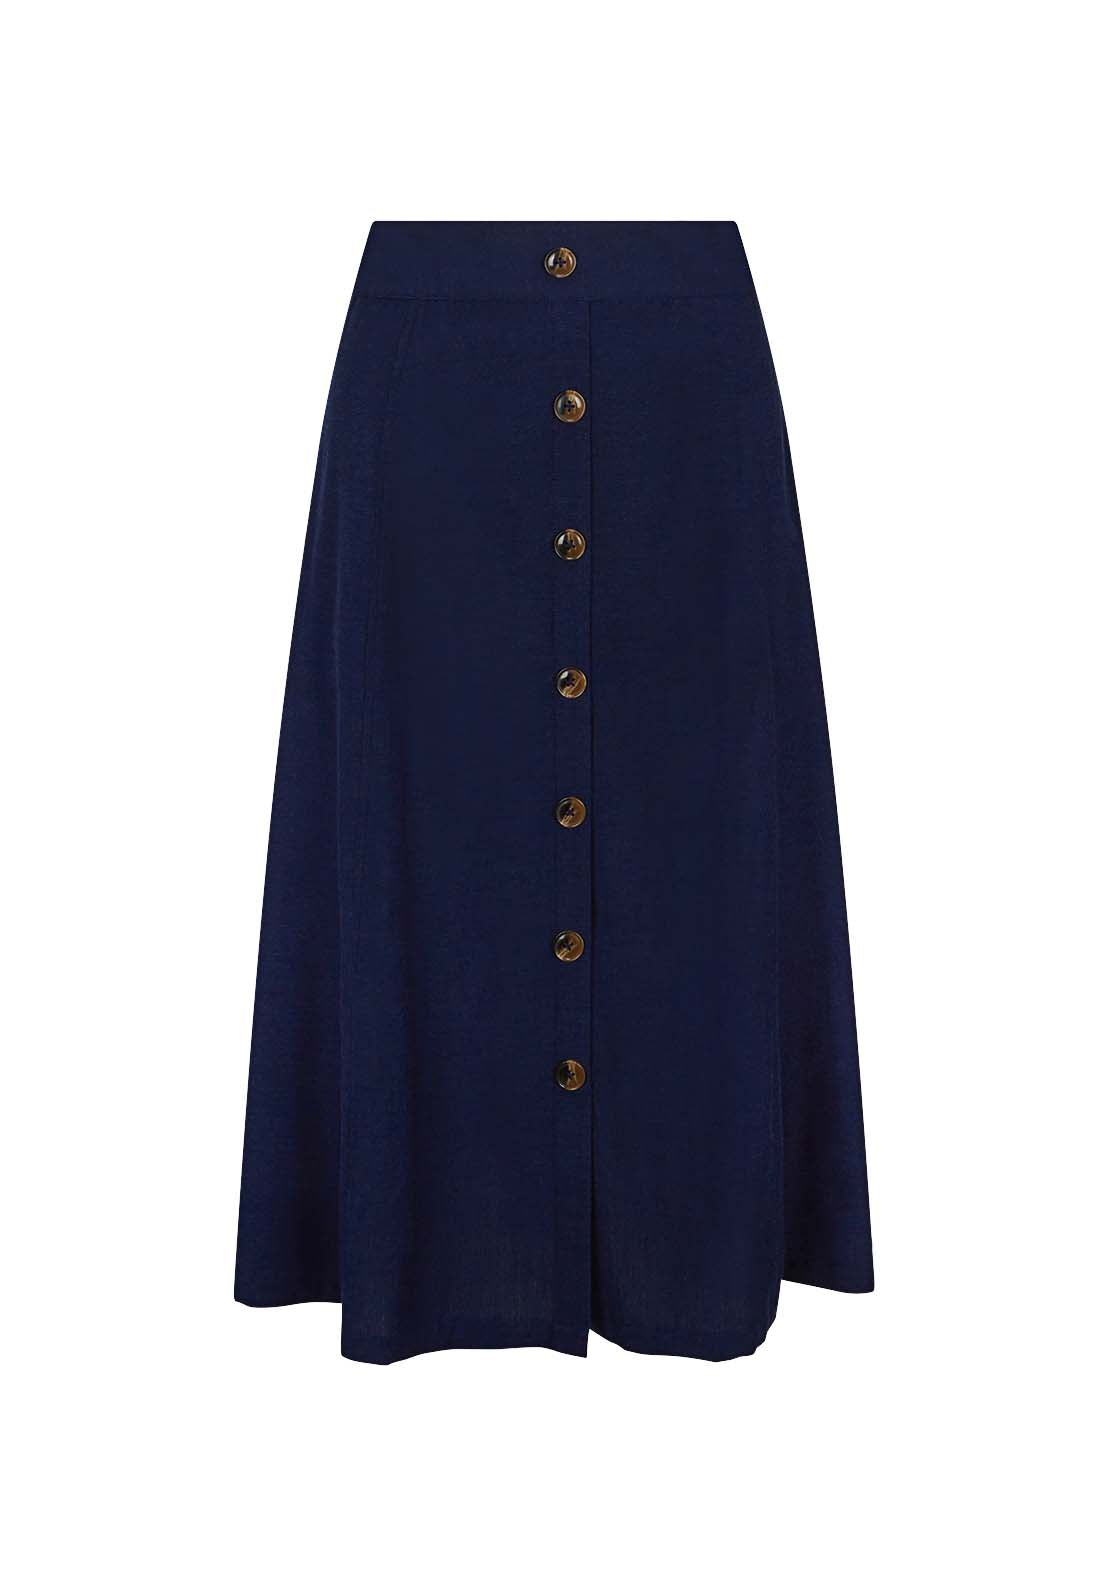 Tigiwear French Navy Linen Skirt 2 Shaws Department Stores